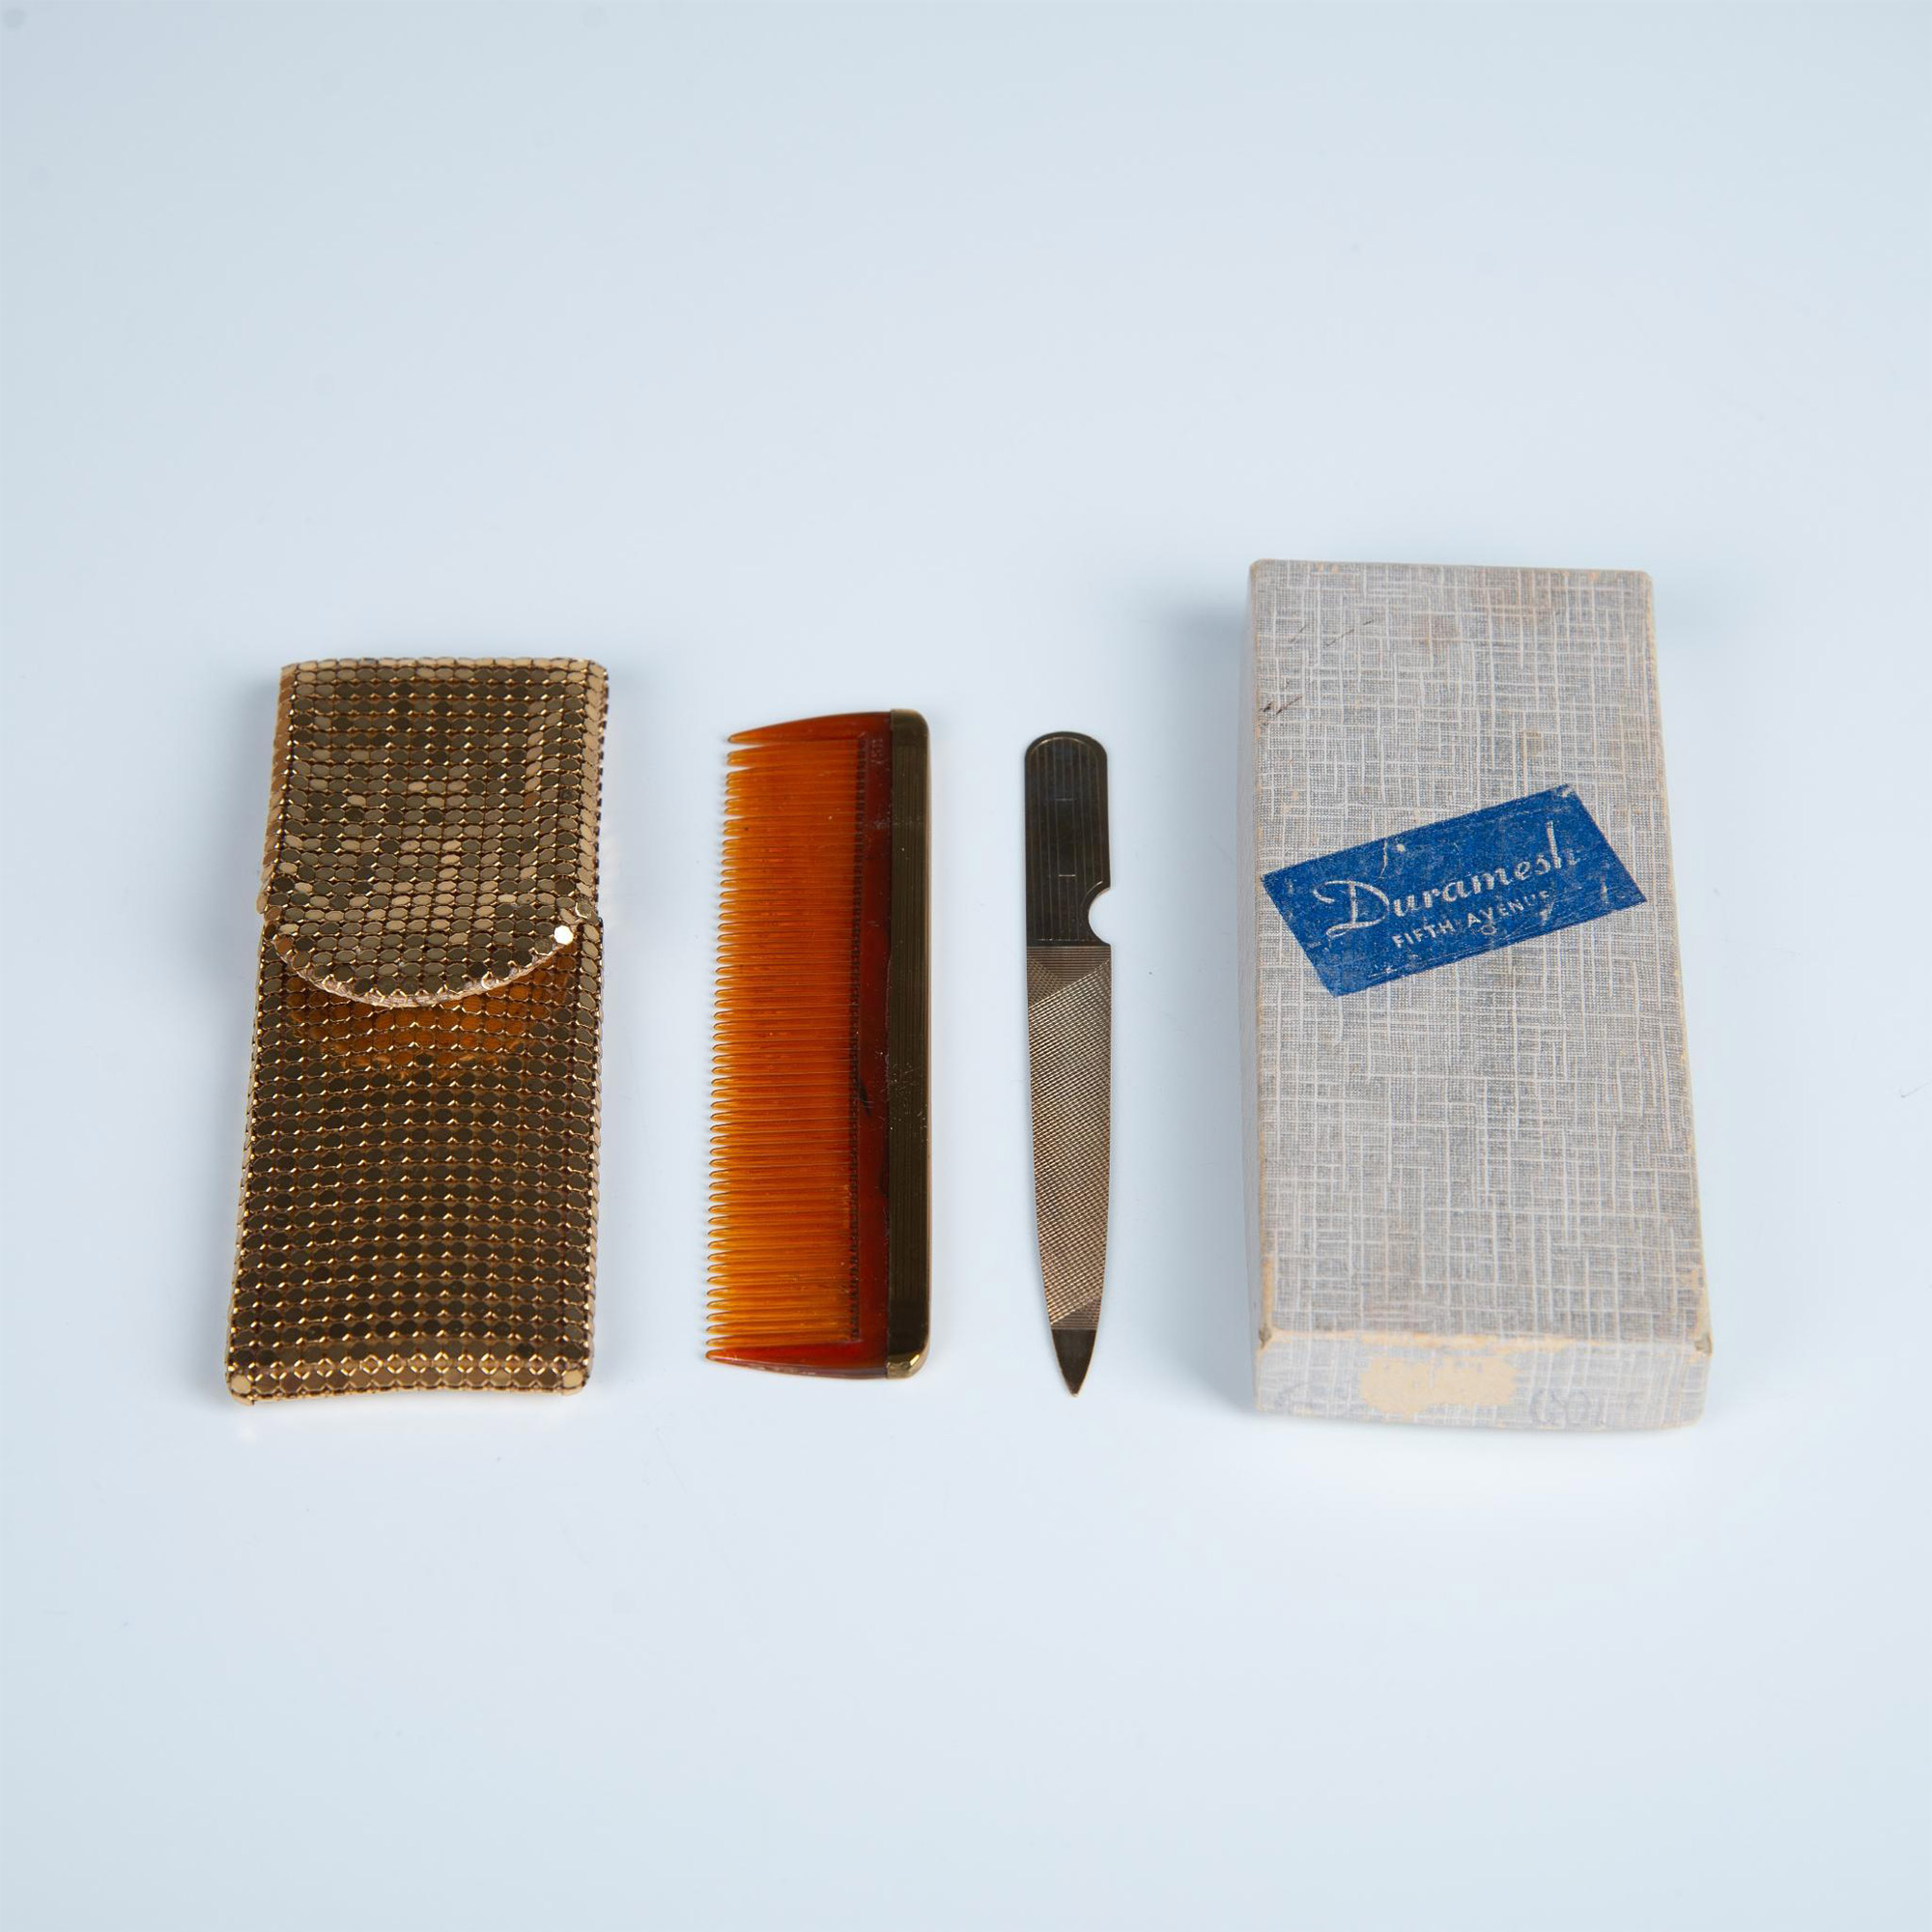 Duramesh Fifth Avenue Golden File & Comb Mini Grooming Kit - Image 3 of 3